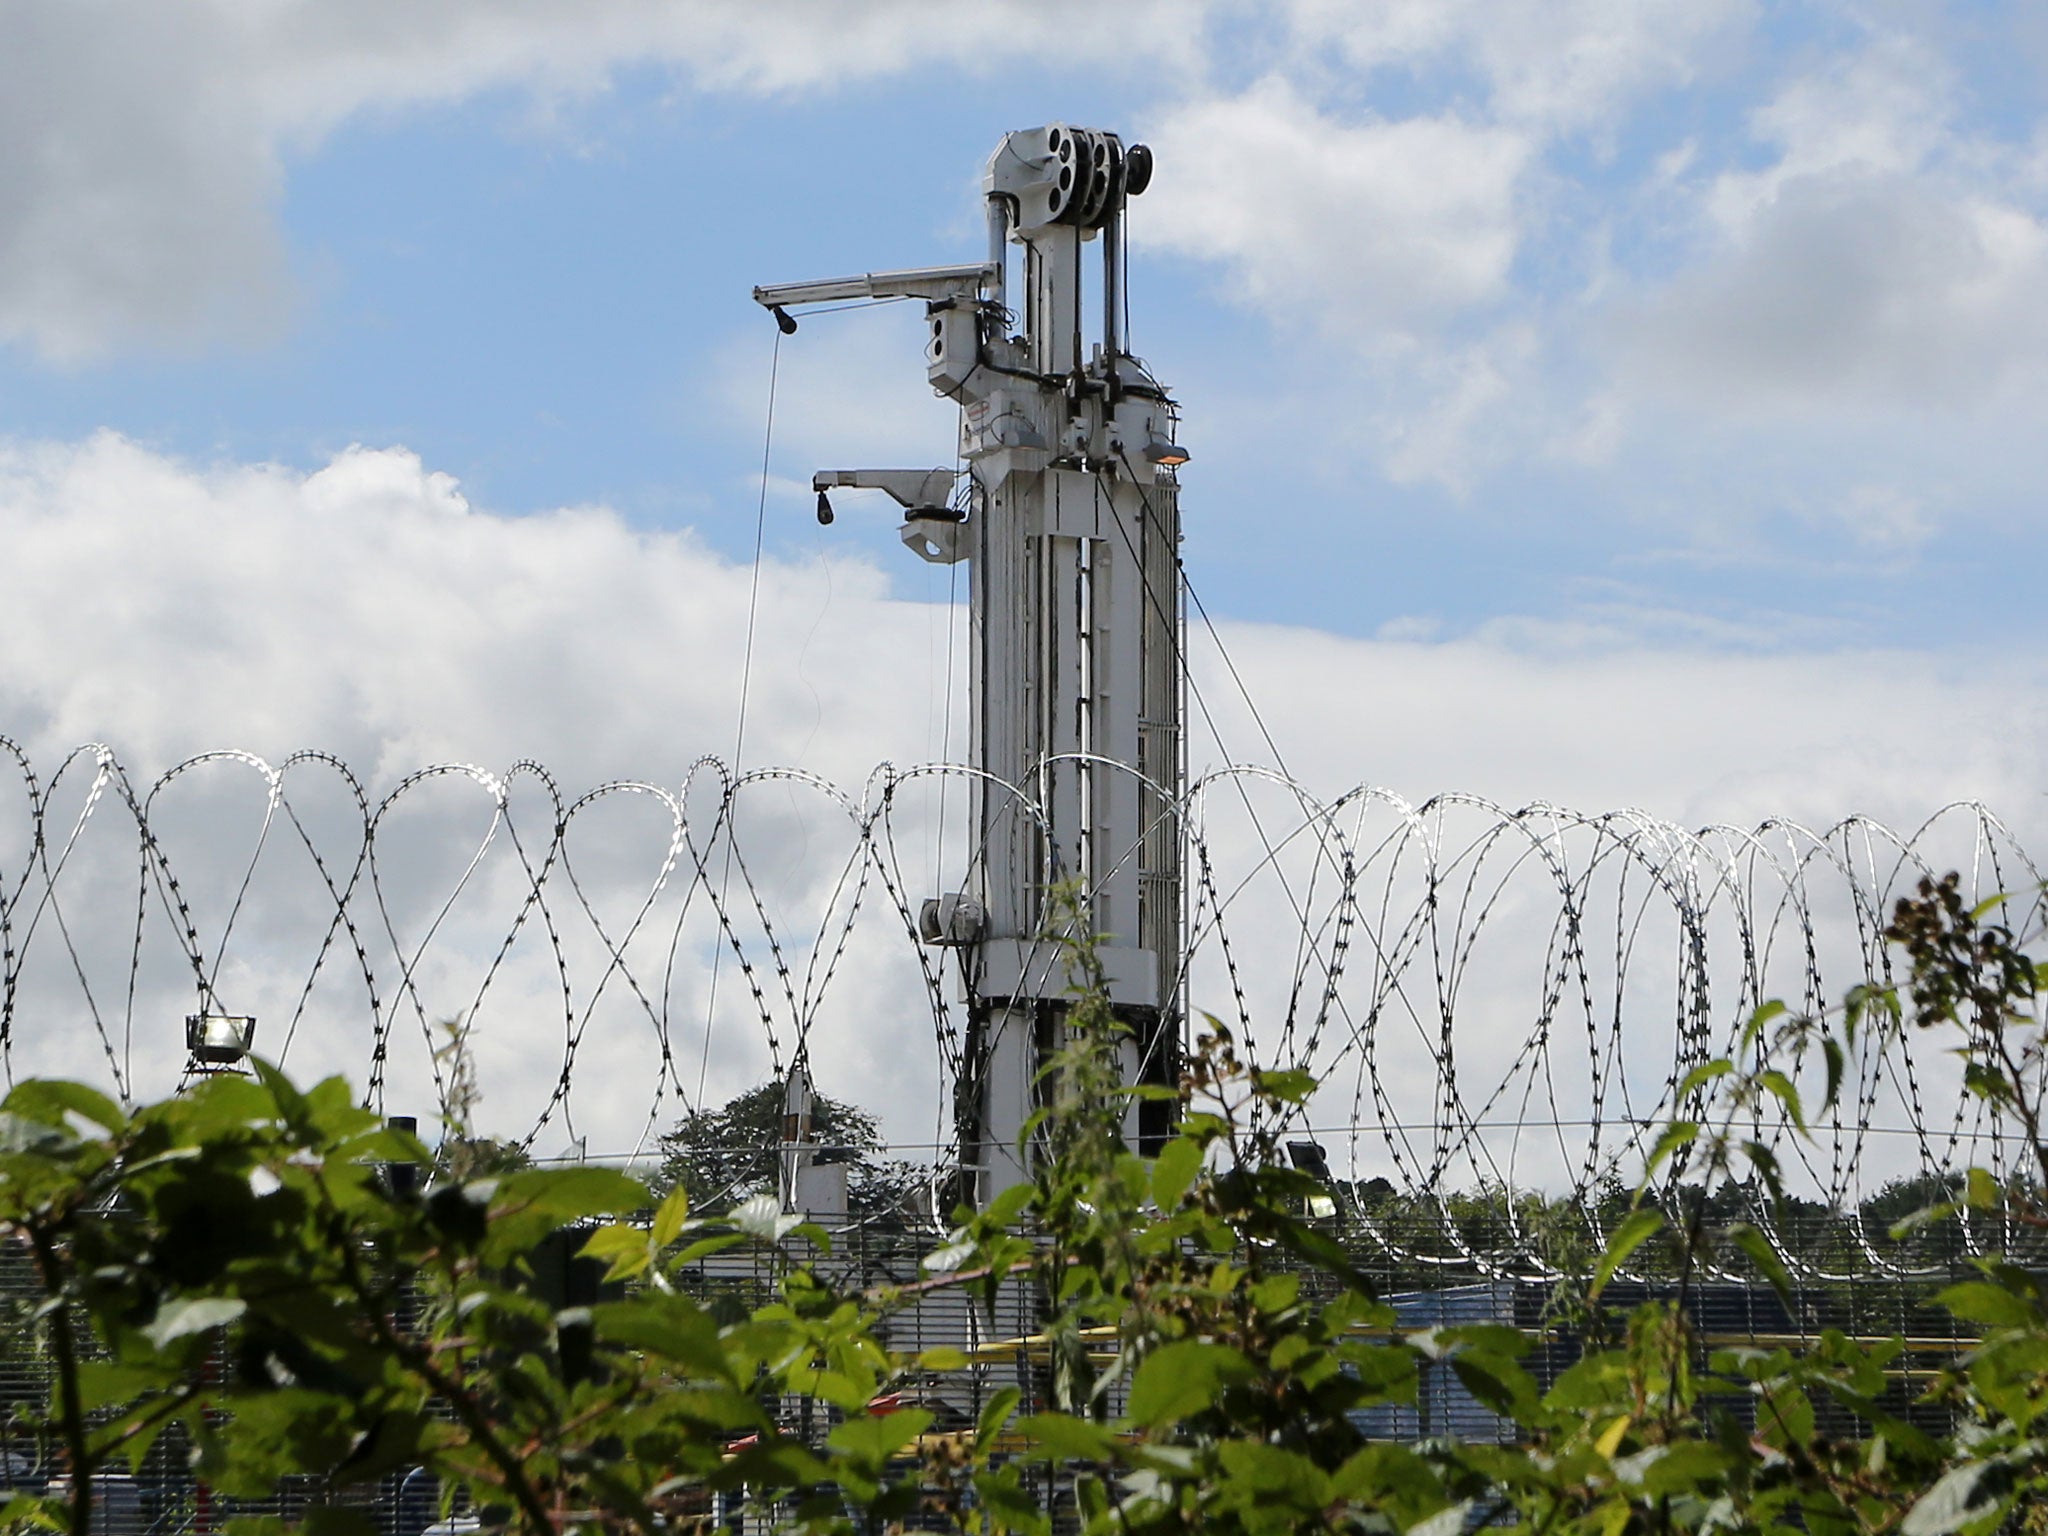 Drilling equipment at the Cuadrilla exploration drilling site in Balcombe